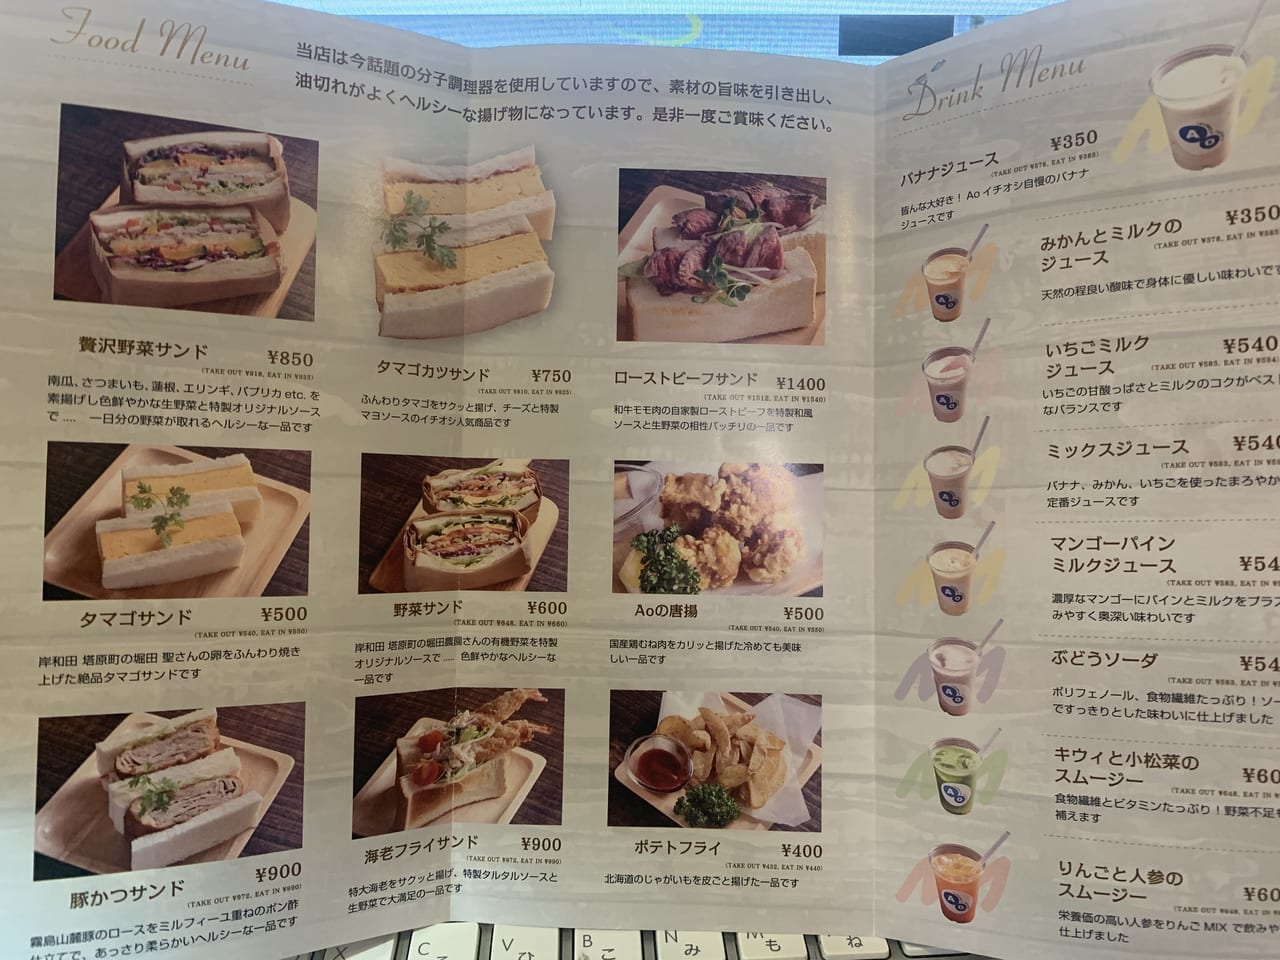 Sandwich&Fryitjuice AO(アオ)